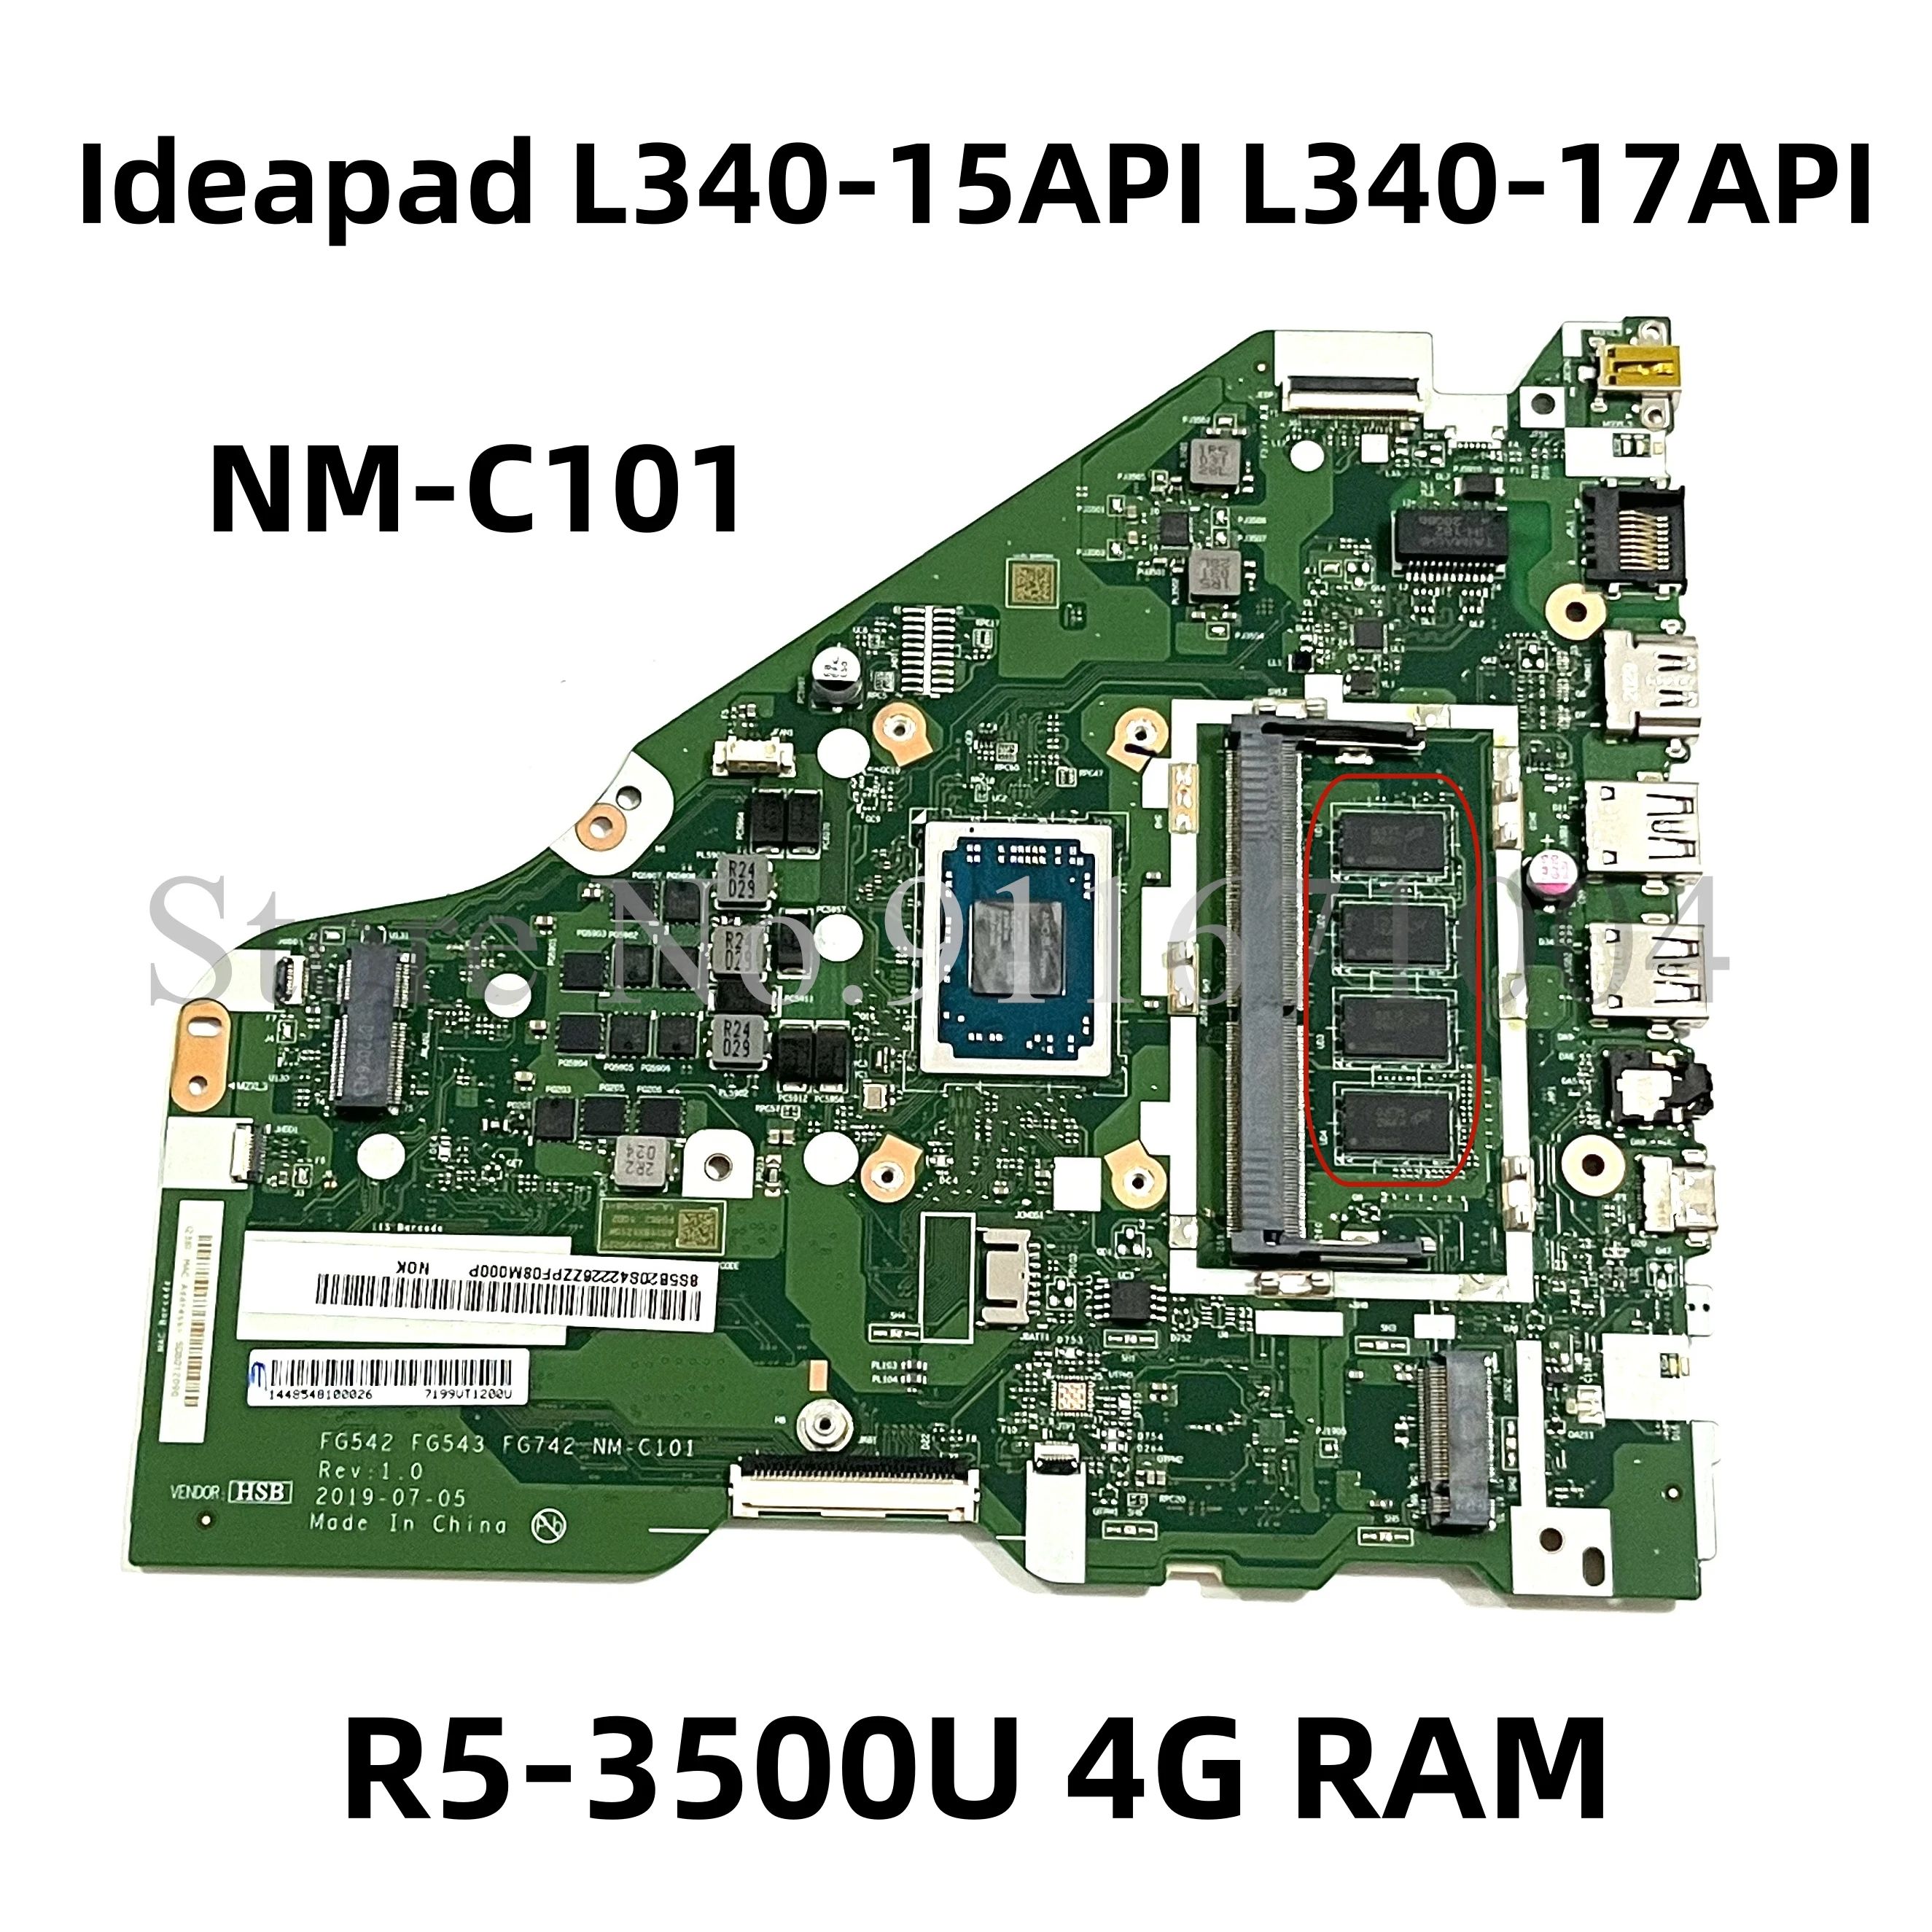 Configuration: R5-3500U 4G RAM